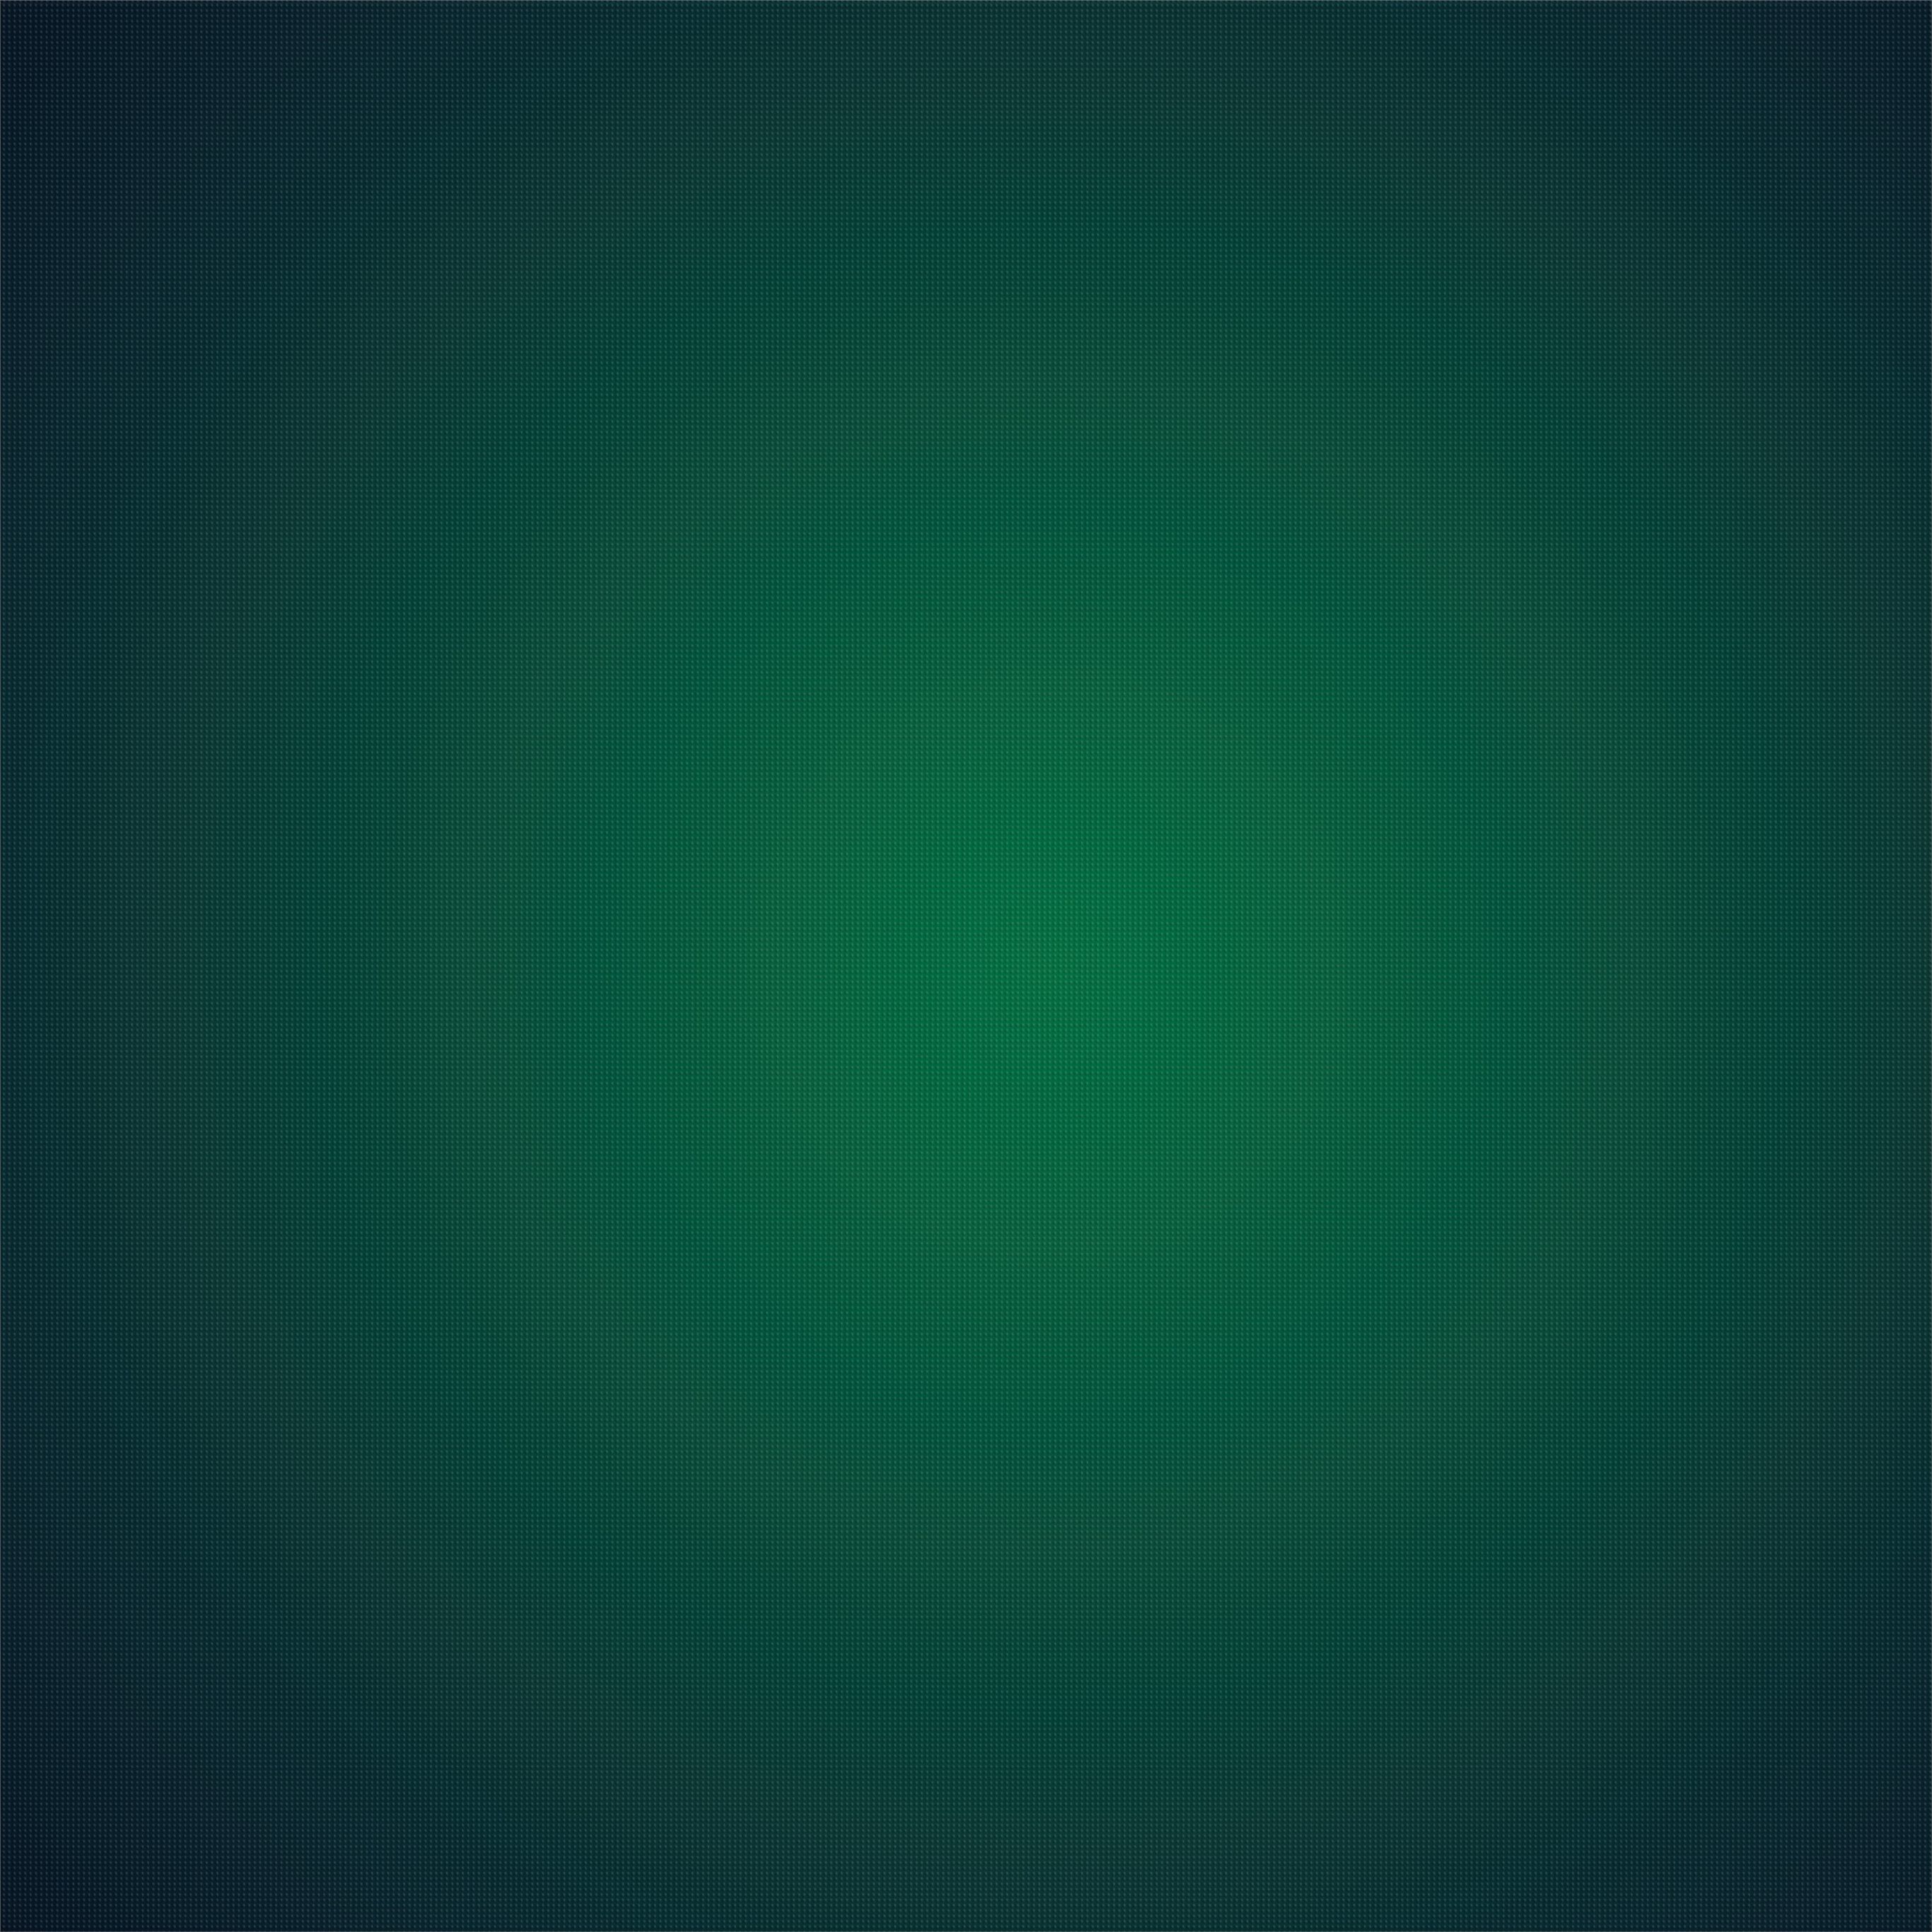 4k green abstract iPad Wallpaper Free Download